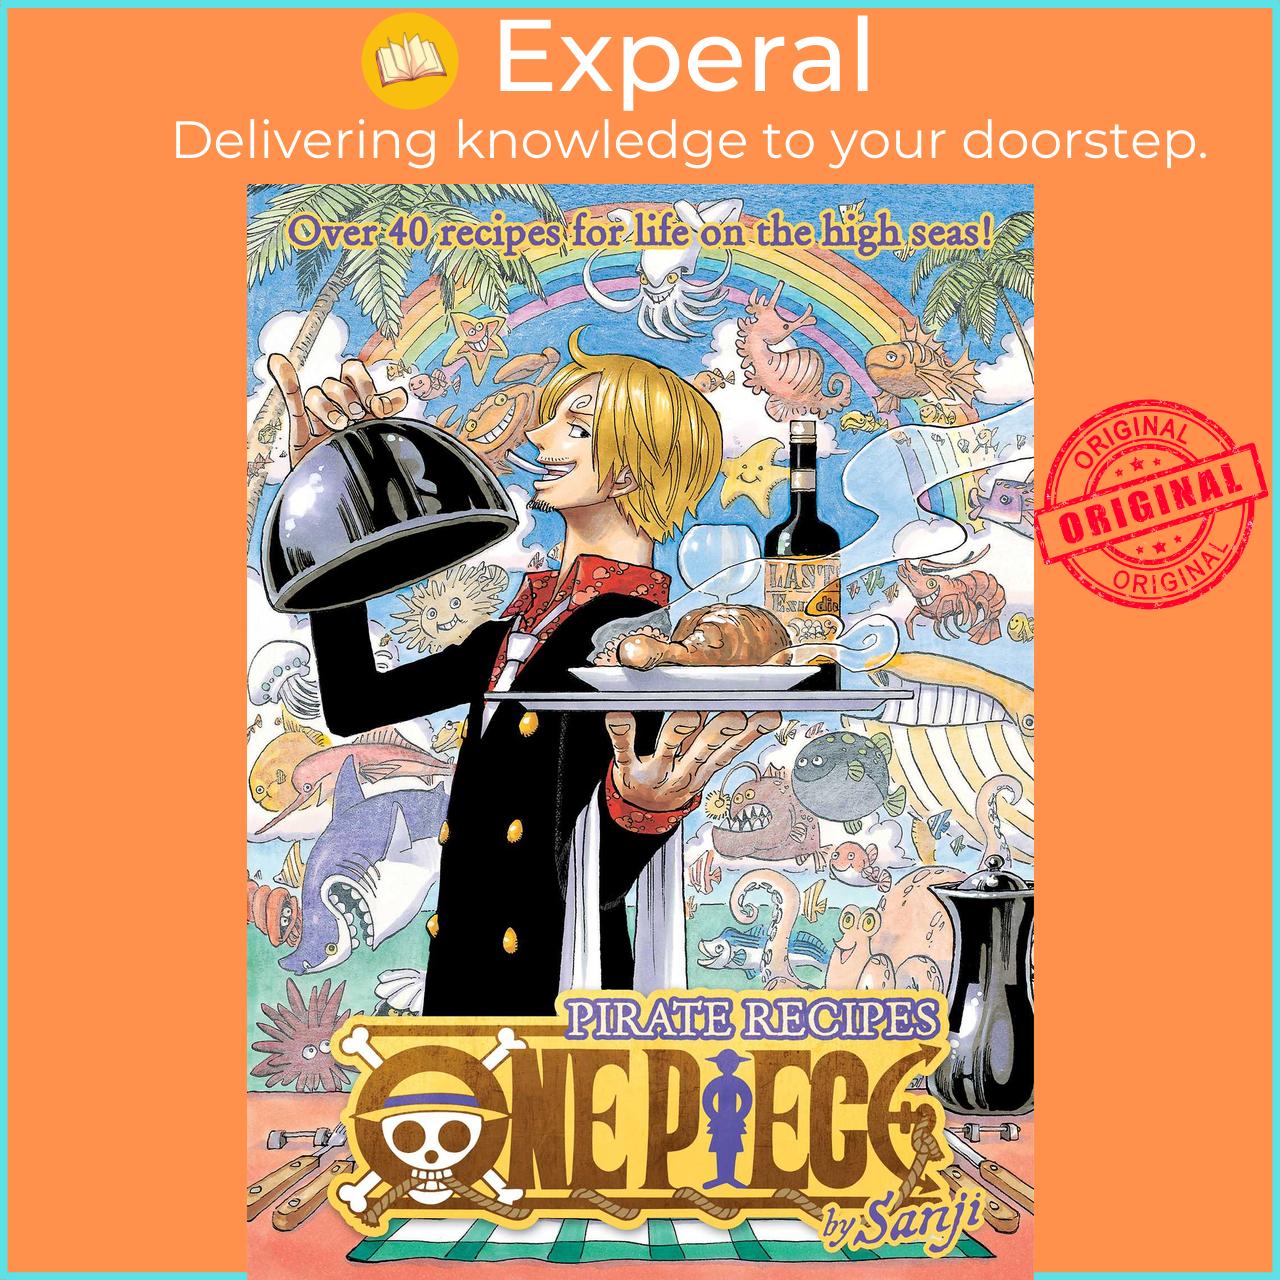 Hình ảnh Sách - One Piece: Pirate Recipes by Sanji (US edition, hardcover)